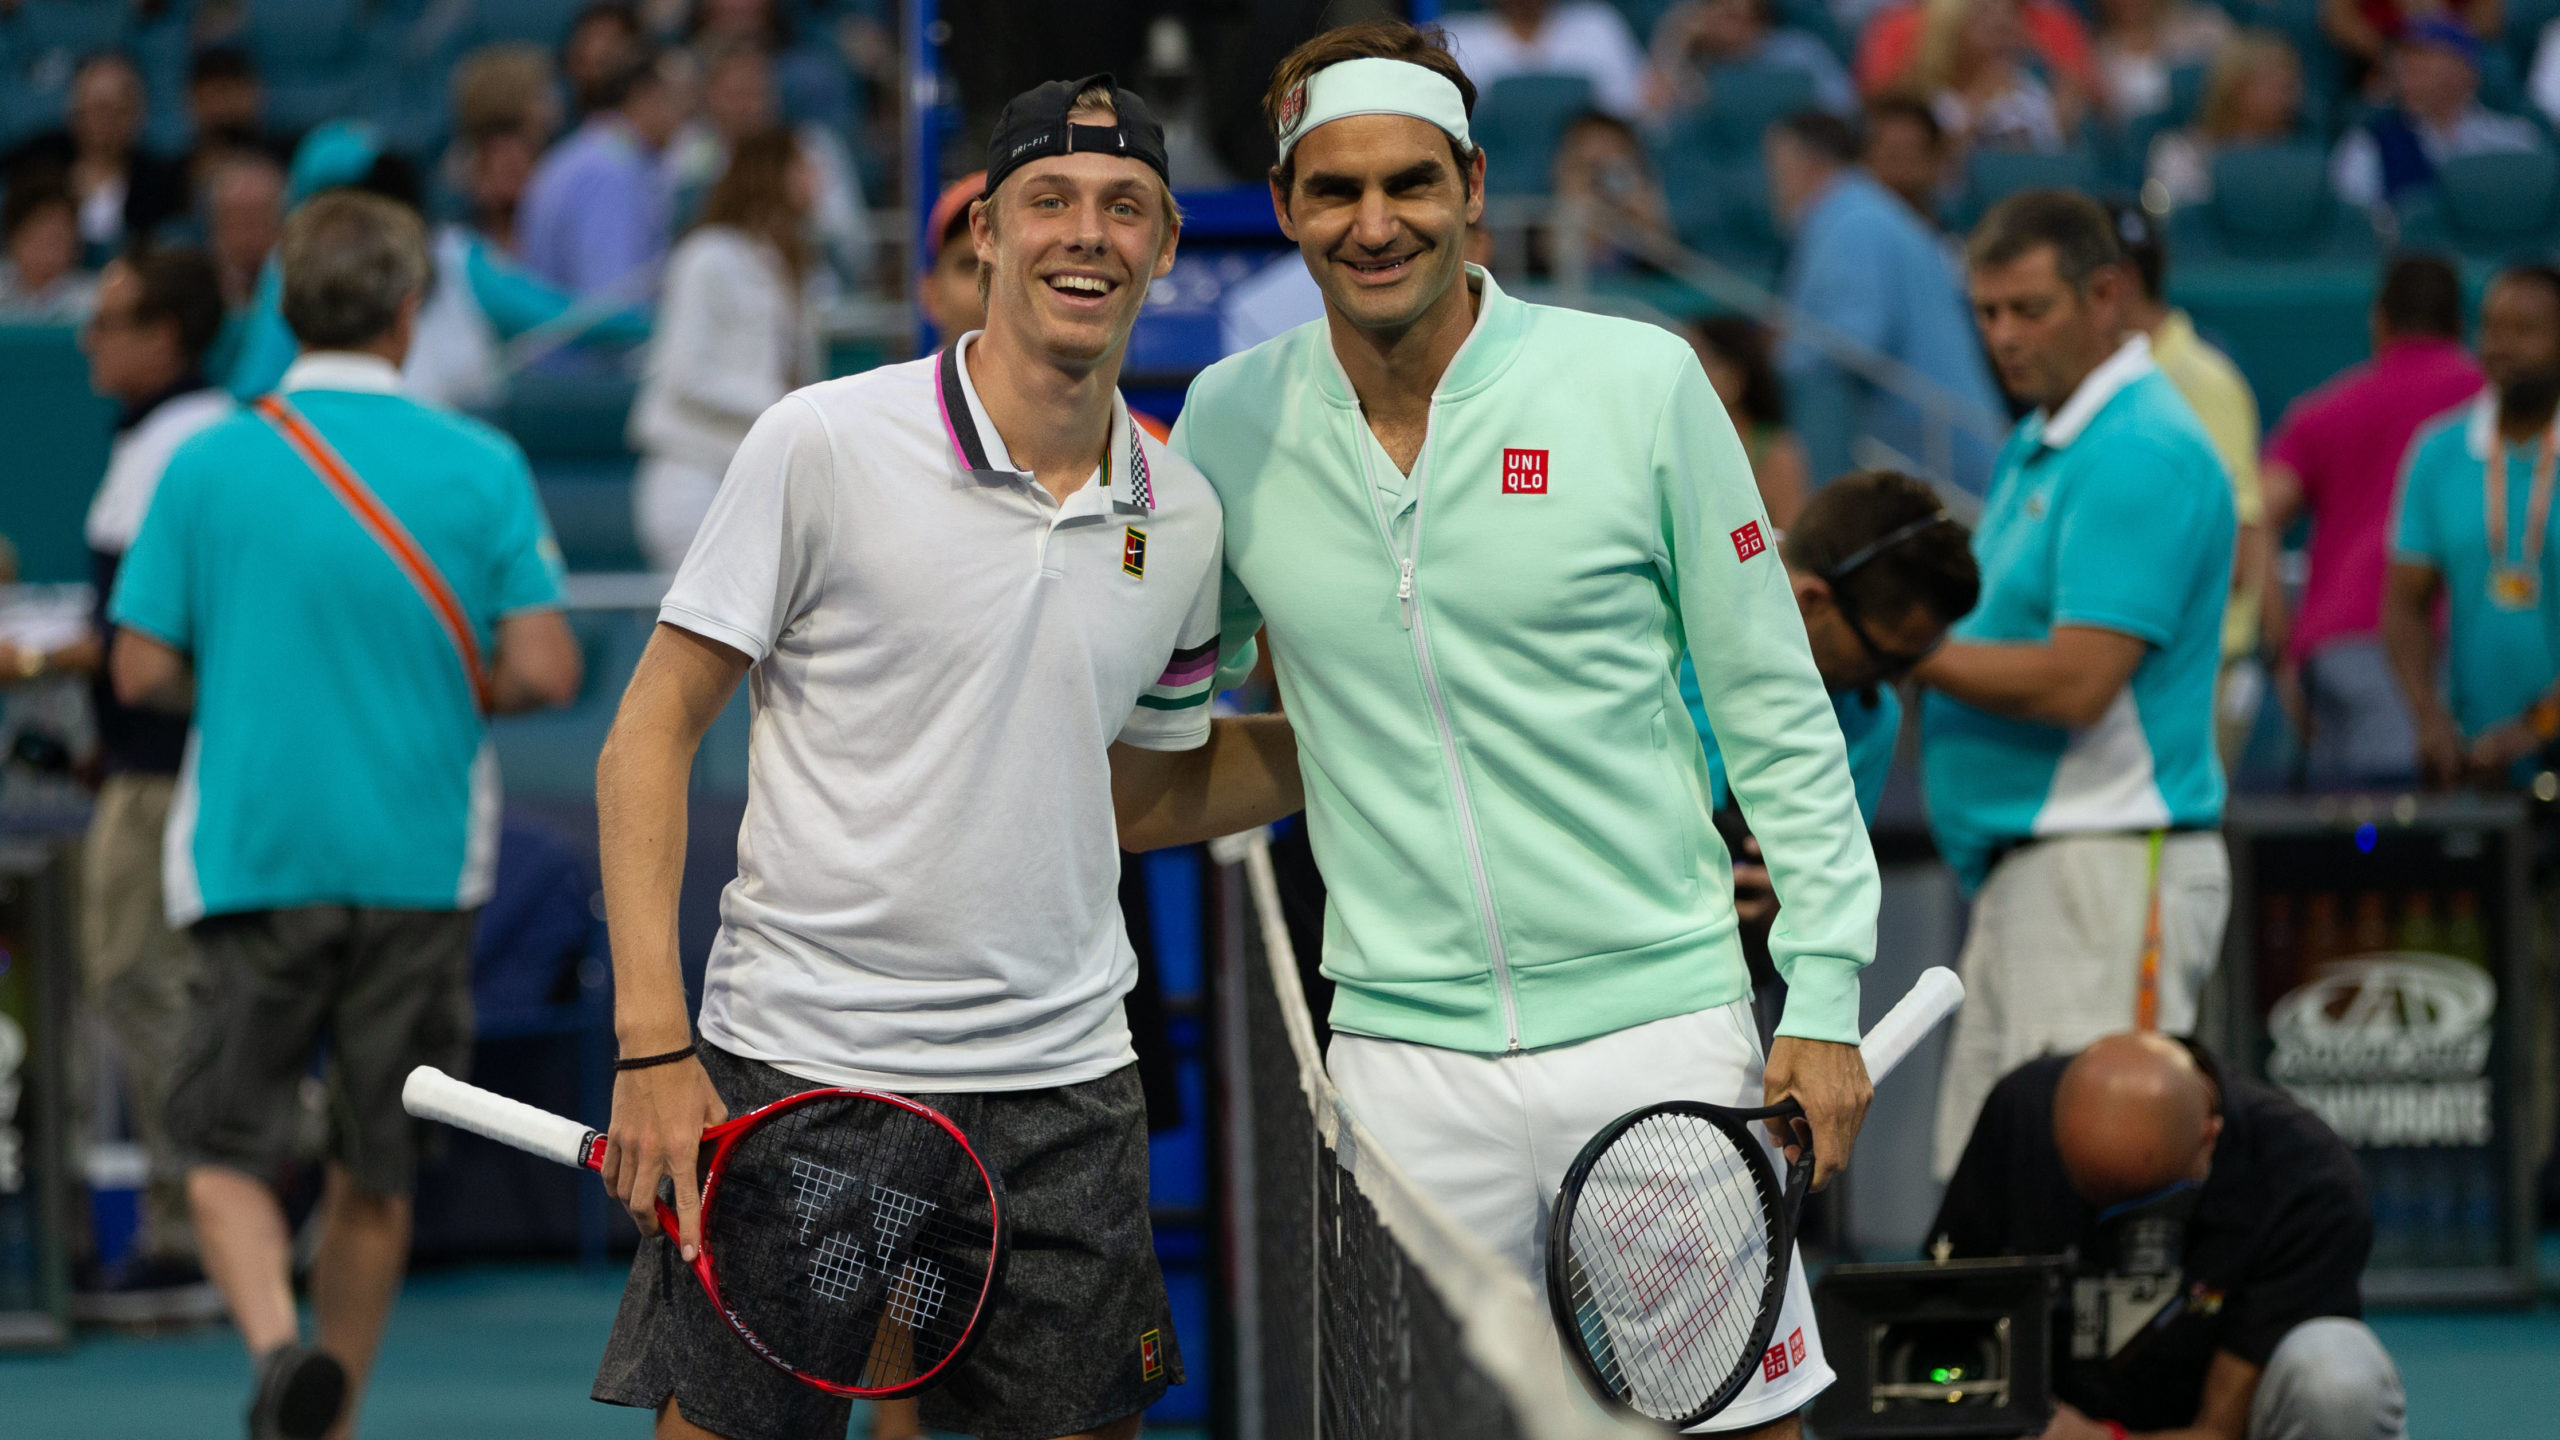 Теннис майами результаты матчей. Пюц т теннис. Теннис фото Роджер Федерер подача на willbal don. BMW Miami Tennis.